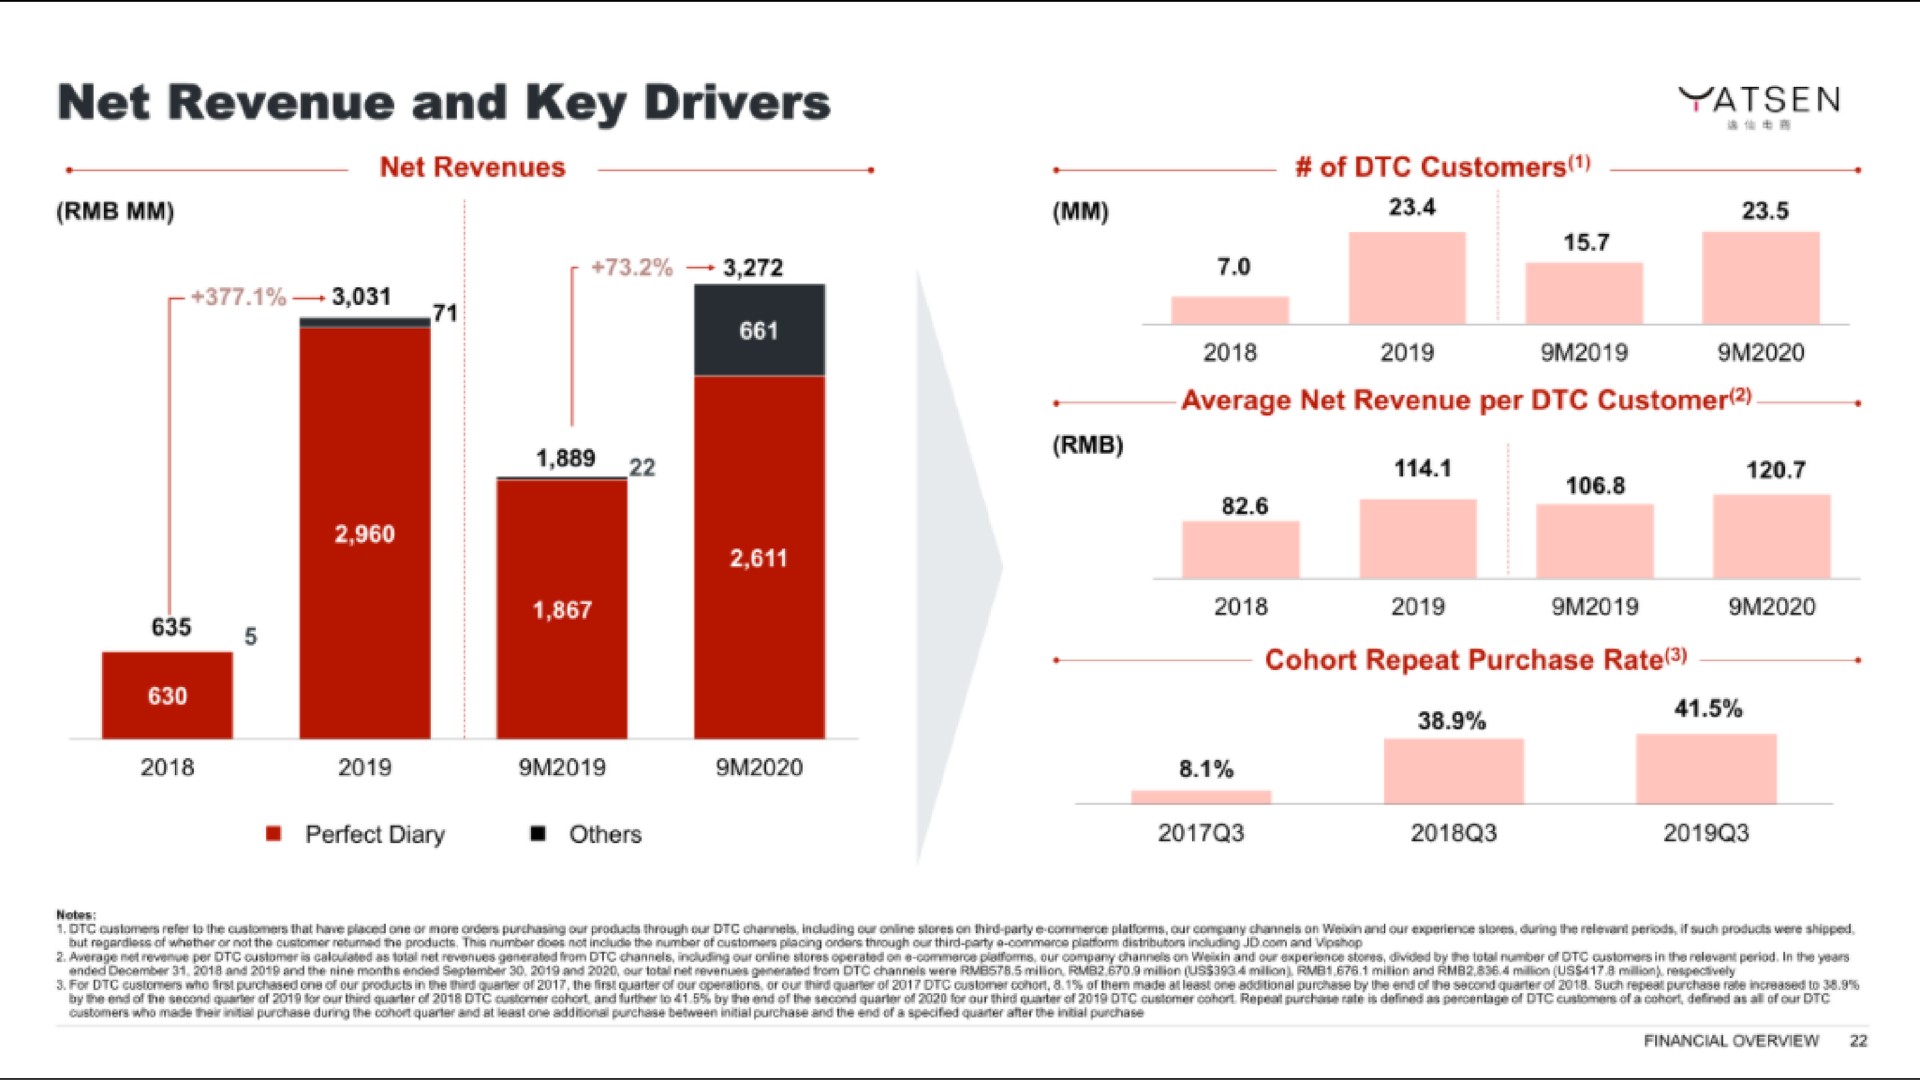 net revenue and key drivers | Yatsen